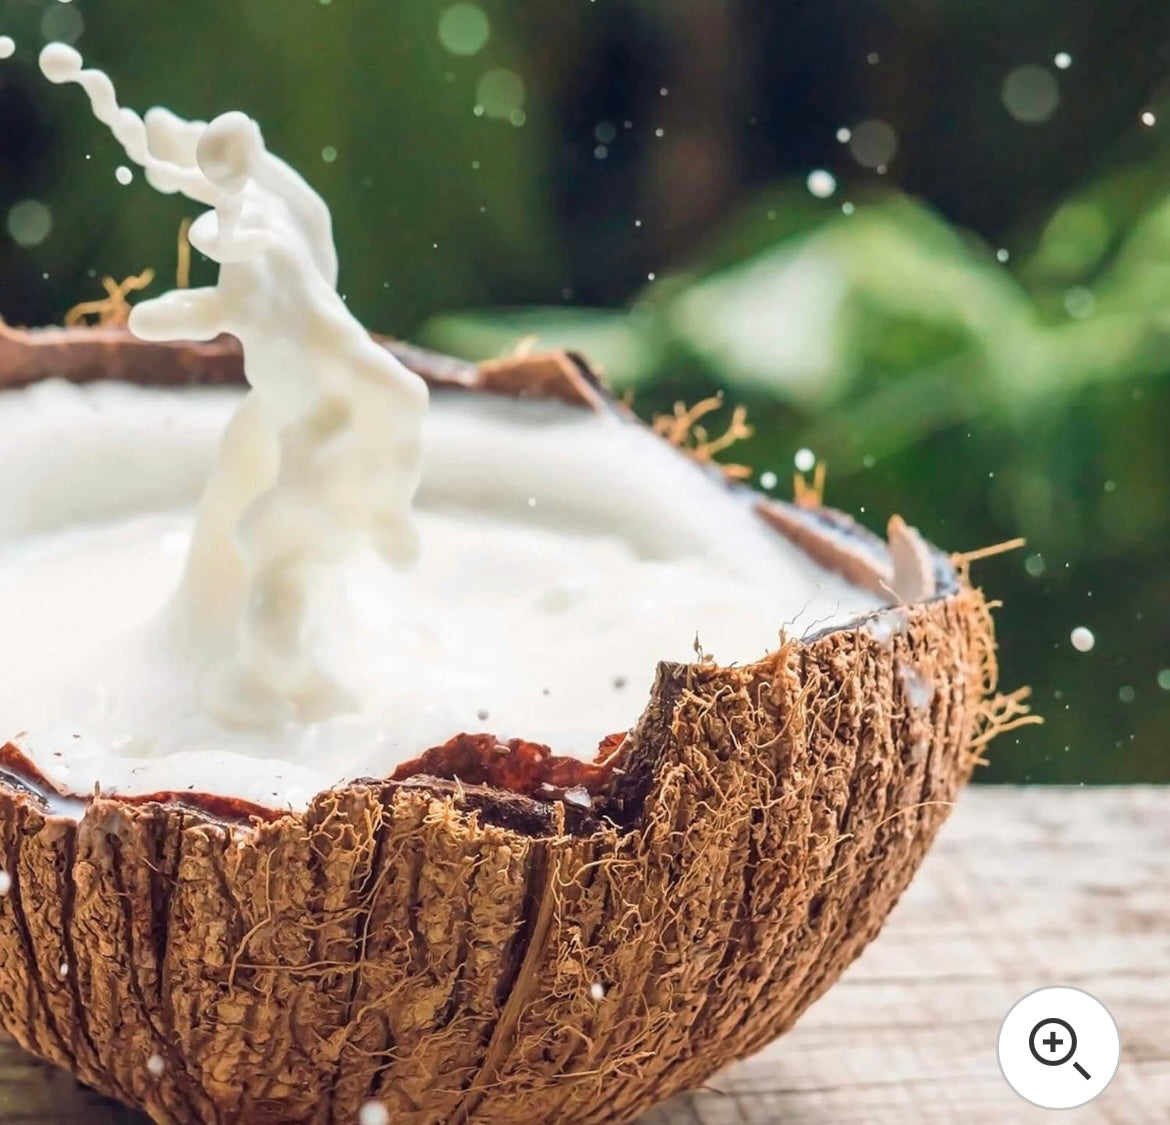 Maui Moisture Nourish and Moisture+ Coconut Milk Conditioner 385ml